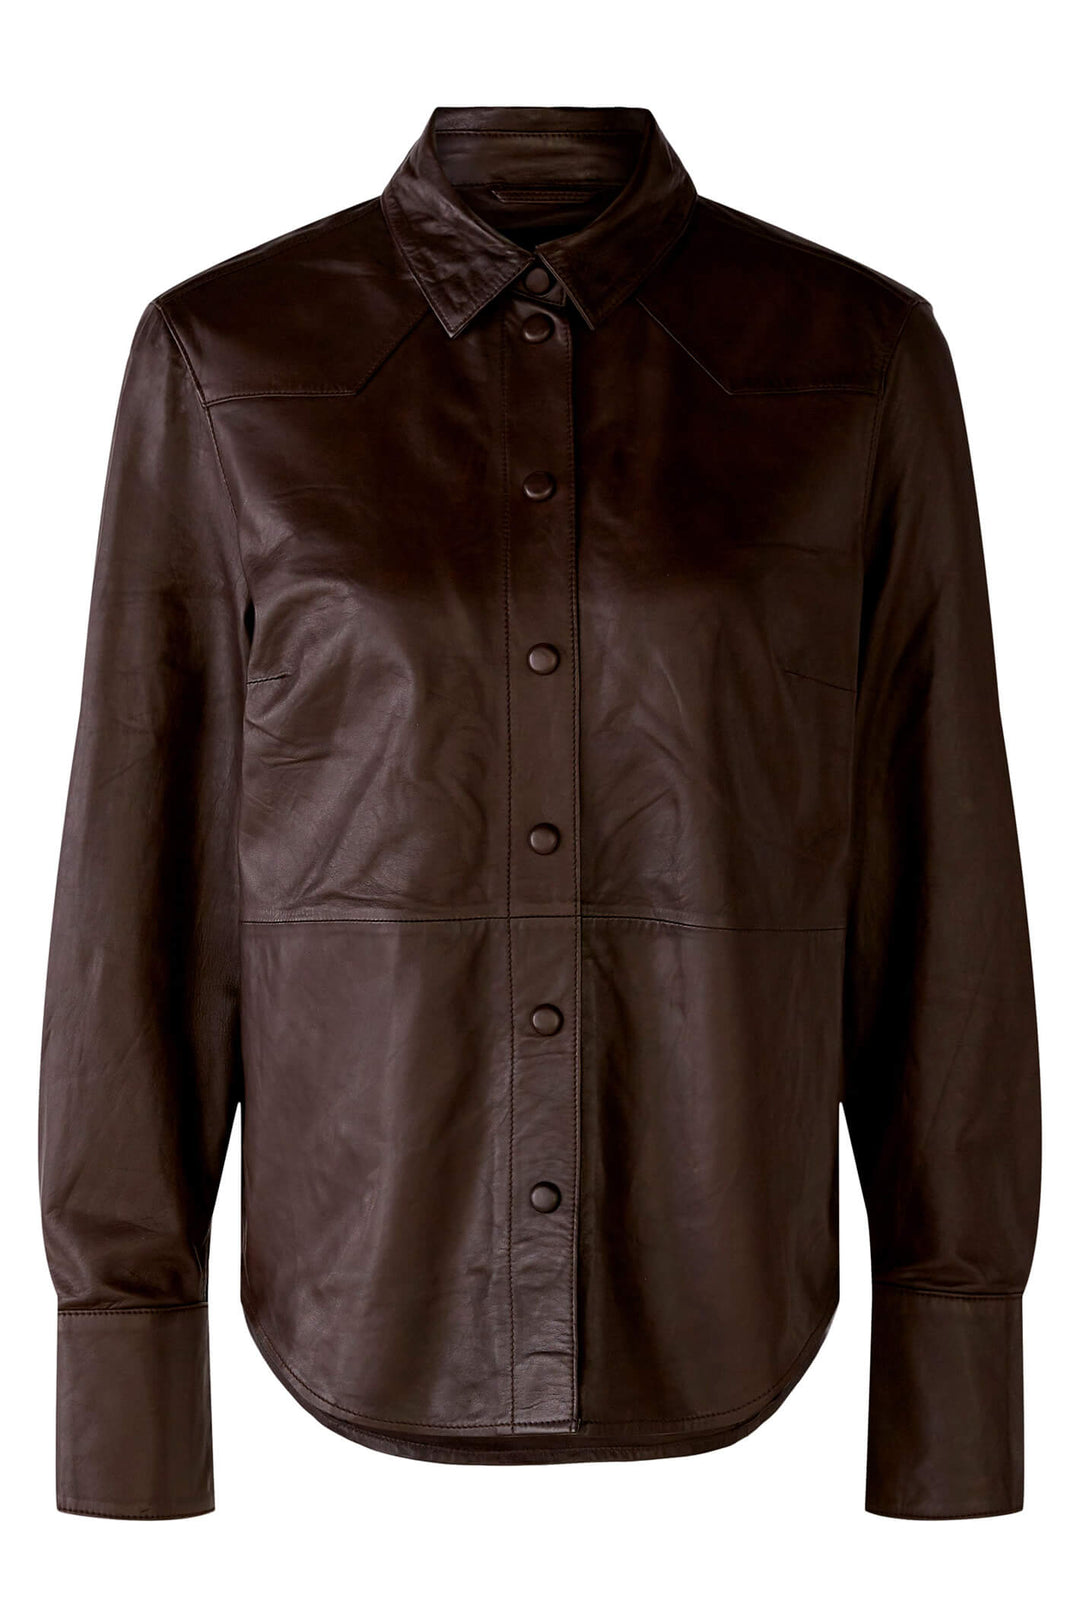 Oui 79854 Dark Brown Leather Shirt - Olivia Grace Fashion